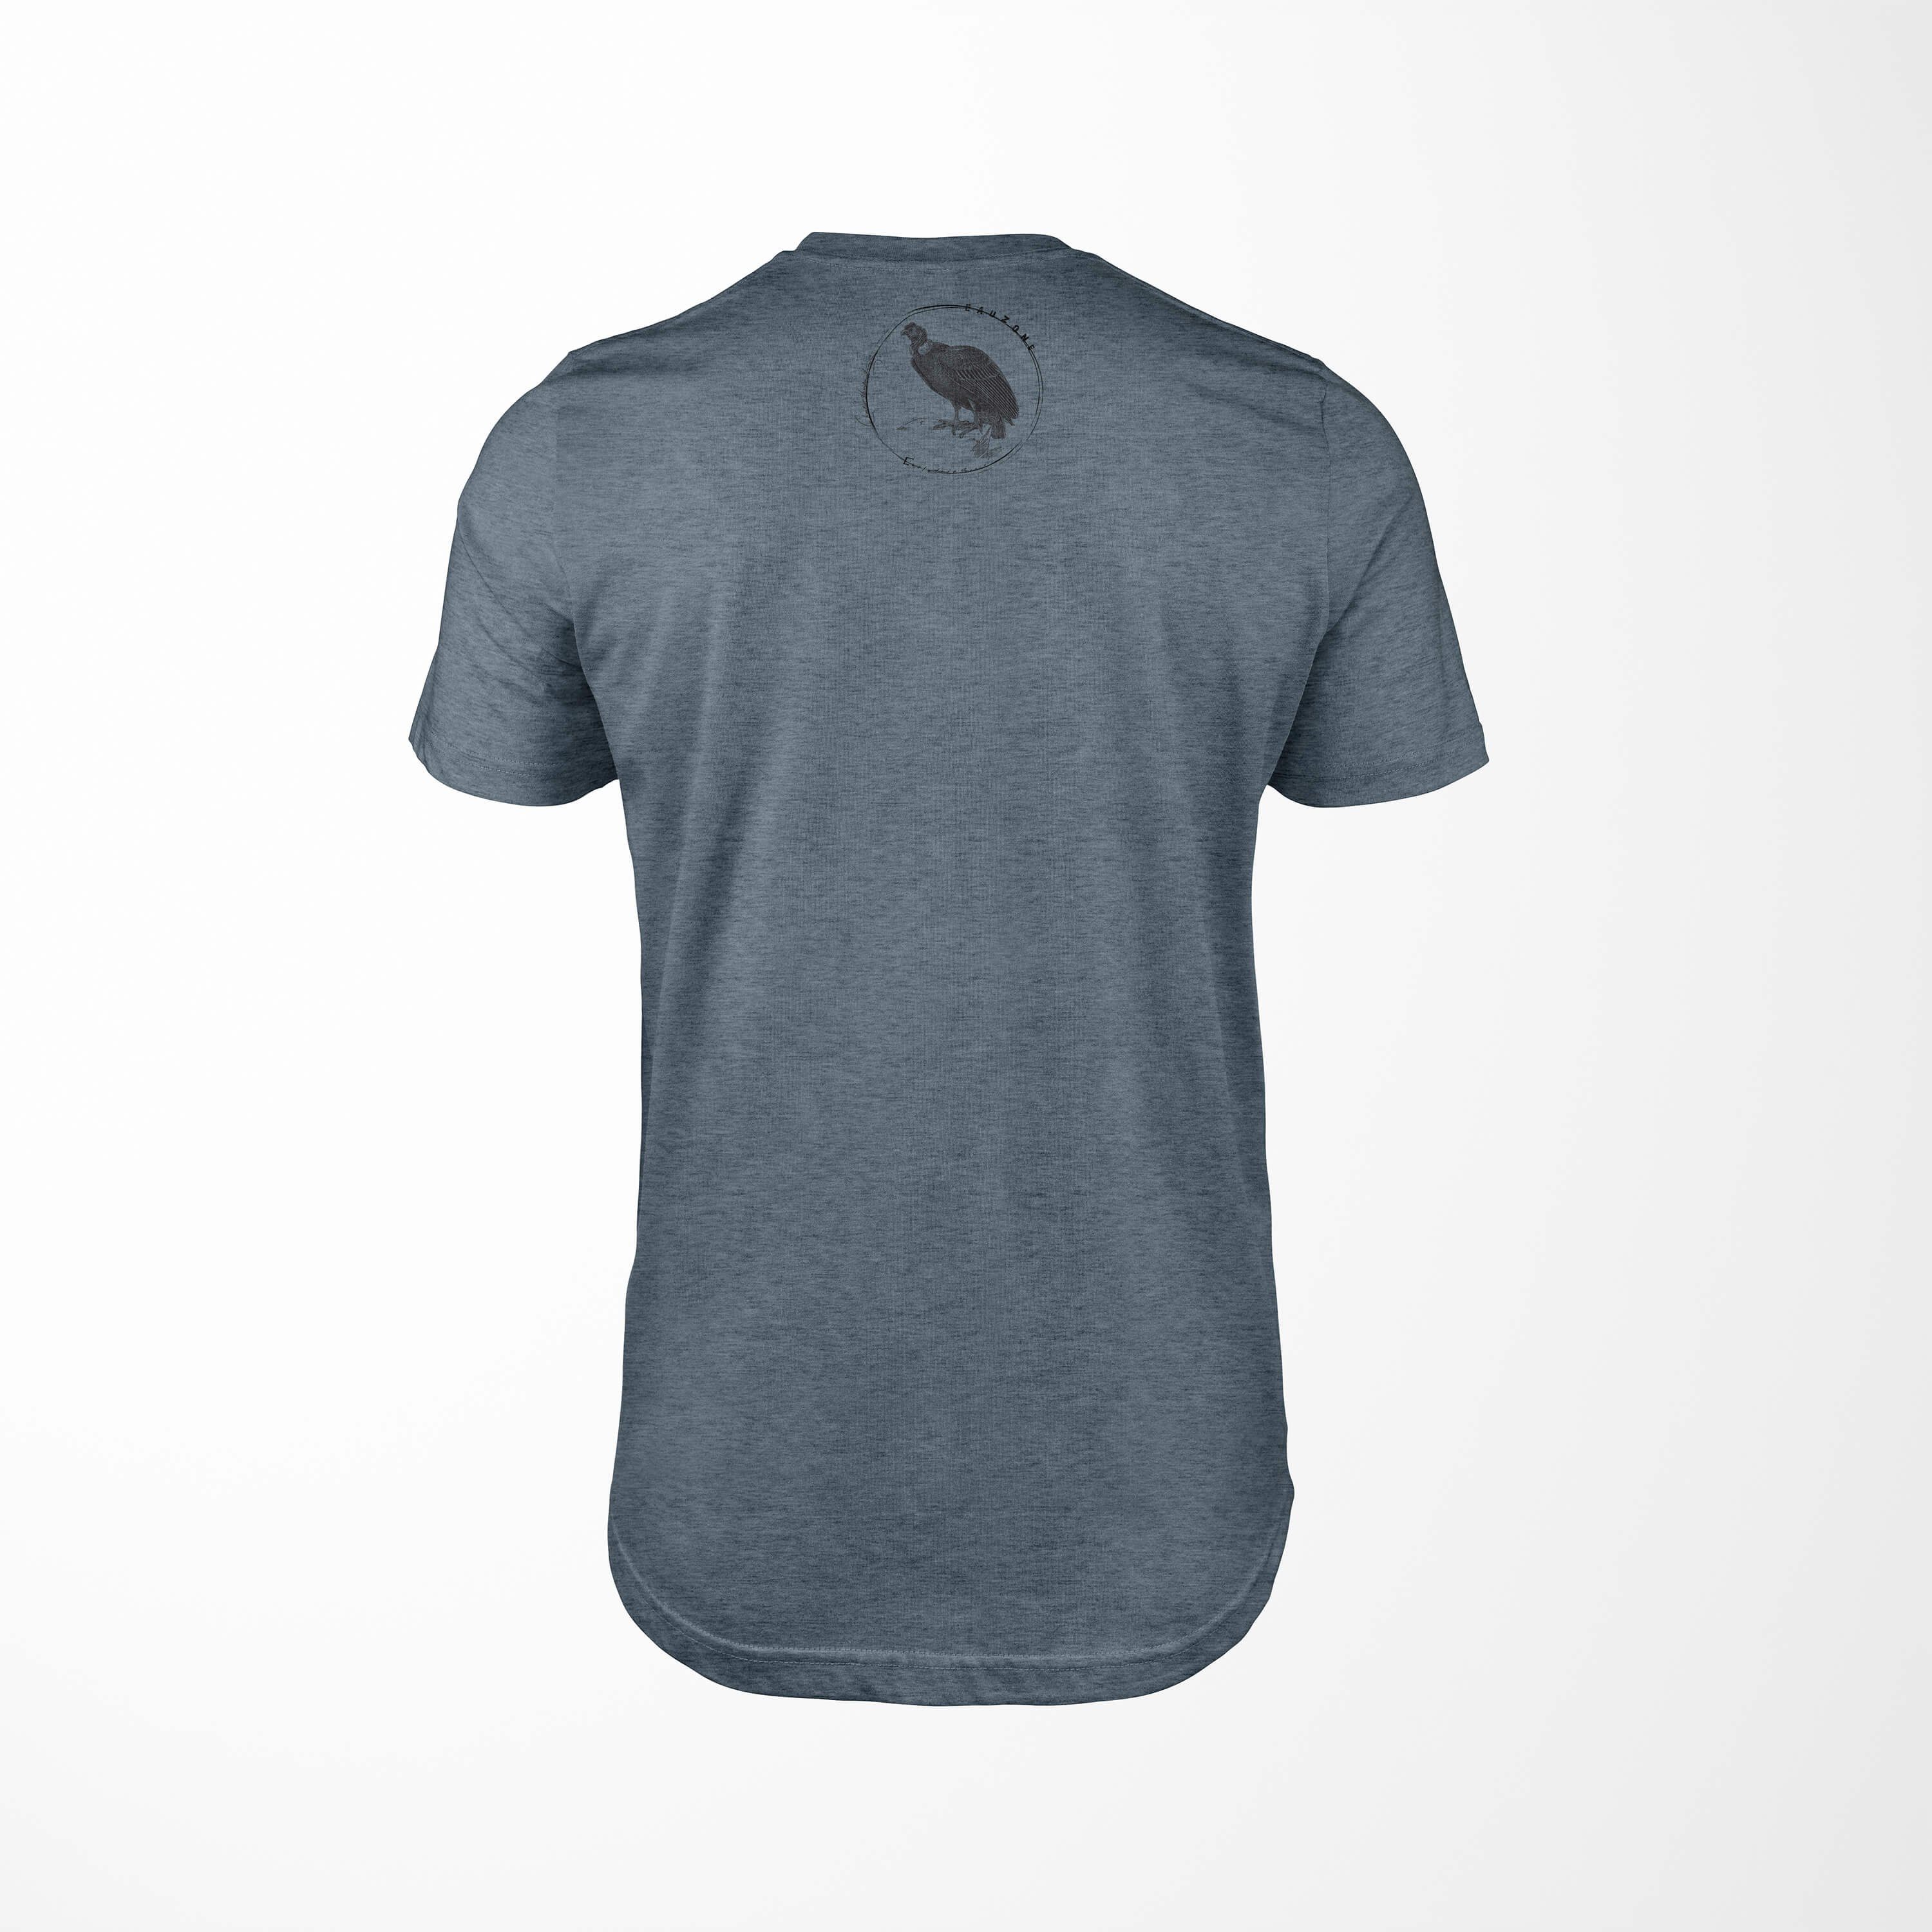 T-Shirt Condor Indigo Sinus Evolution Art T-Shirt Herren